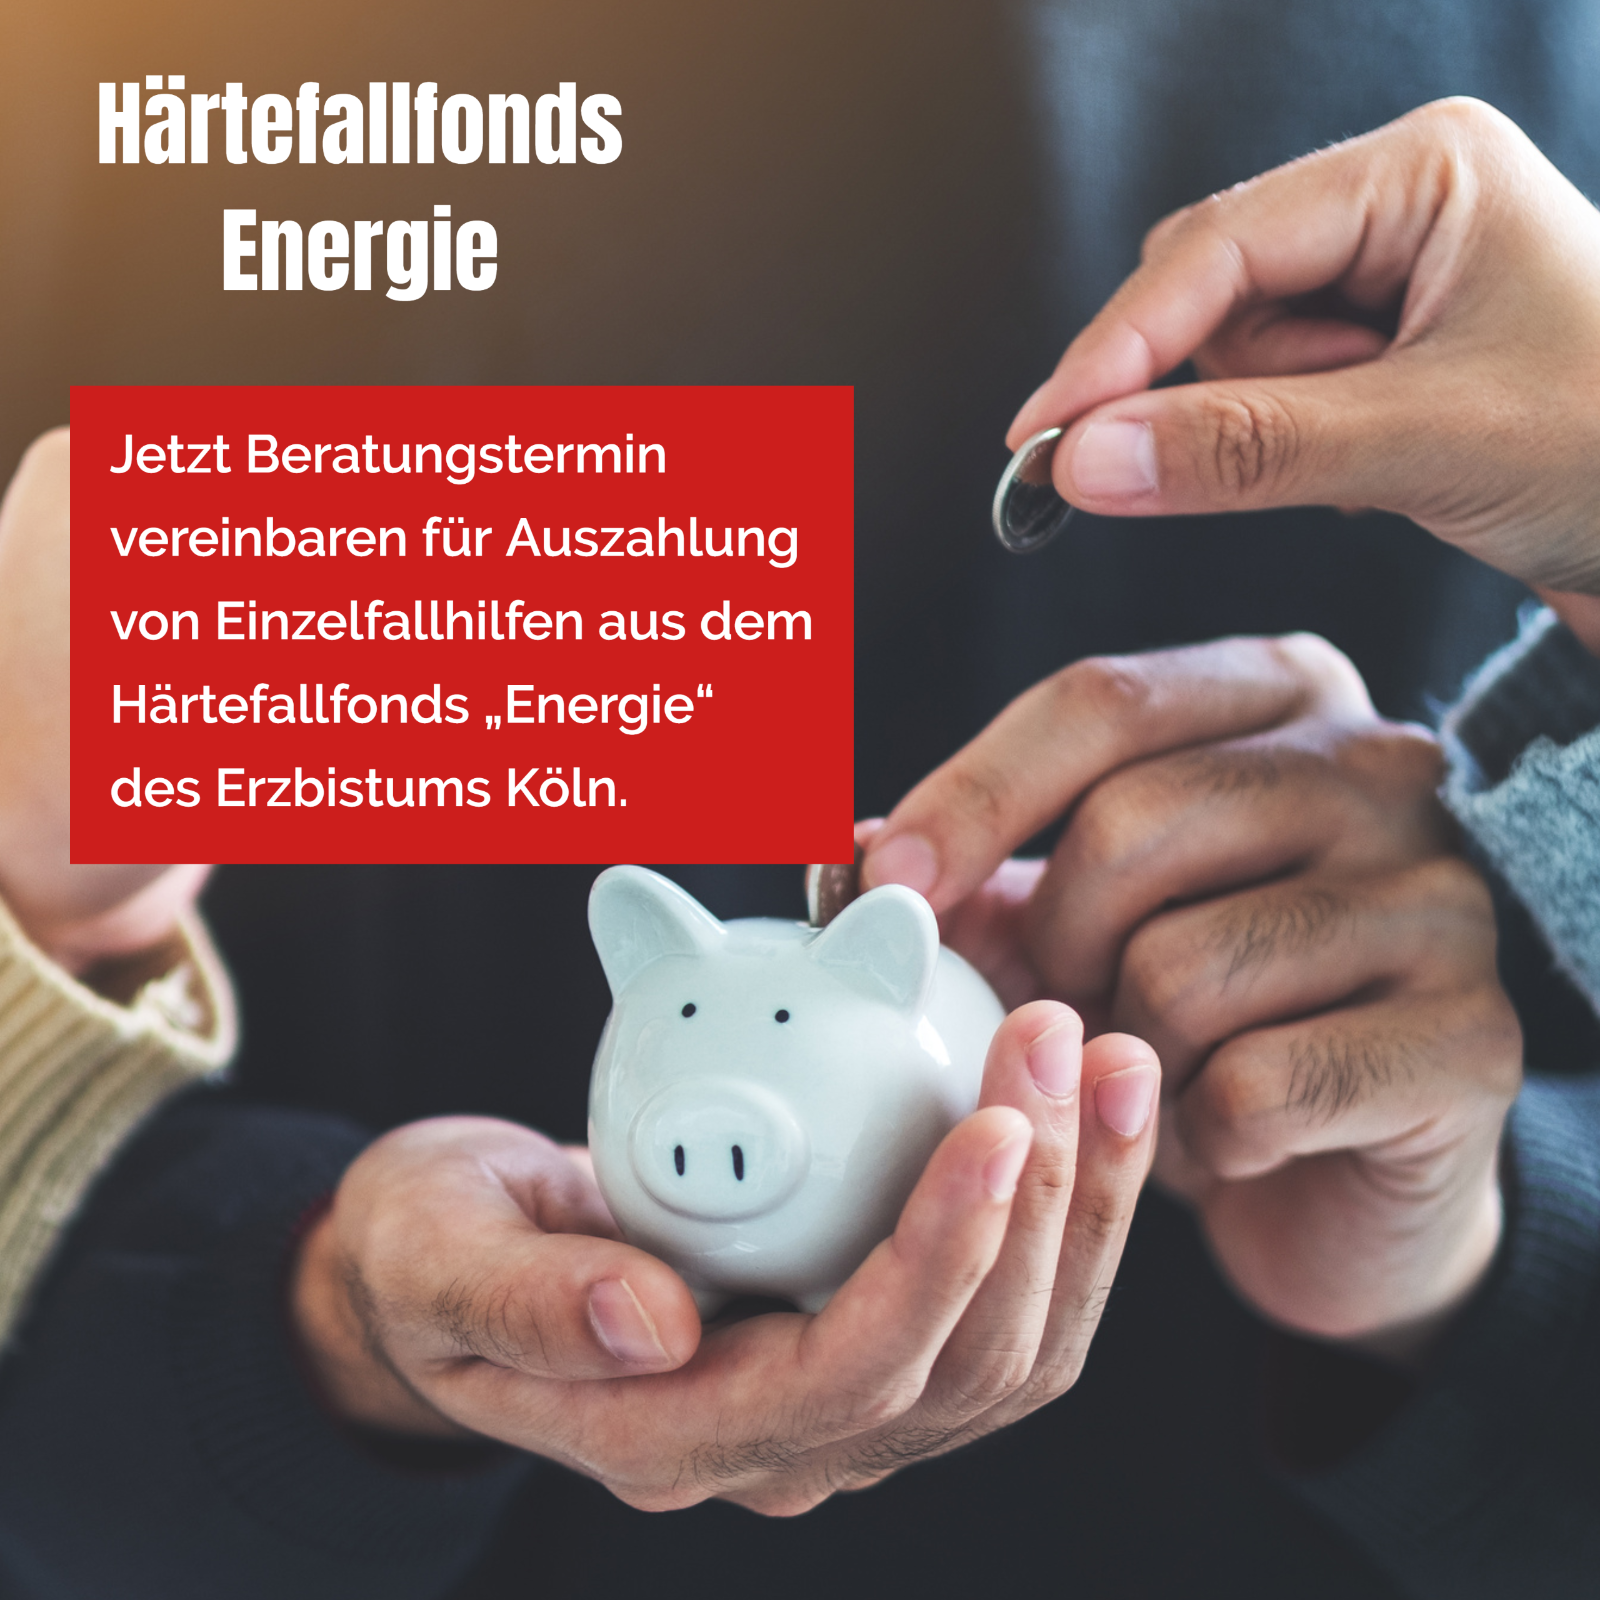 Beratung Härtefallfond Energie (c) Caritasverband Euskirchen AdobeStock 394943310